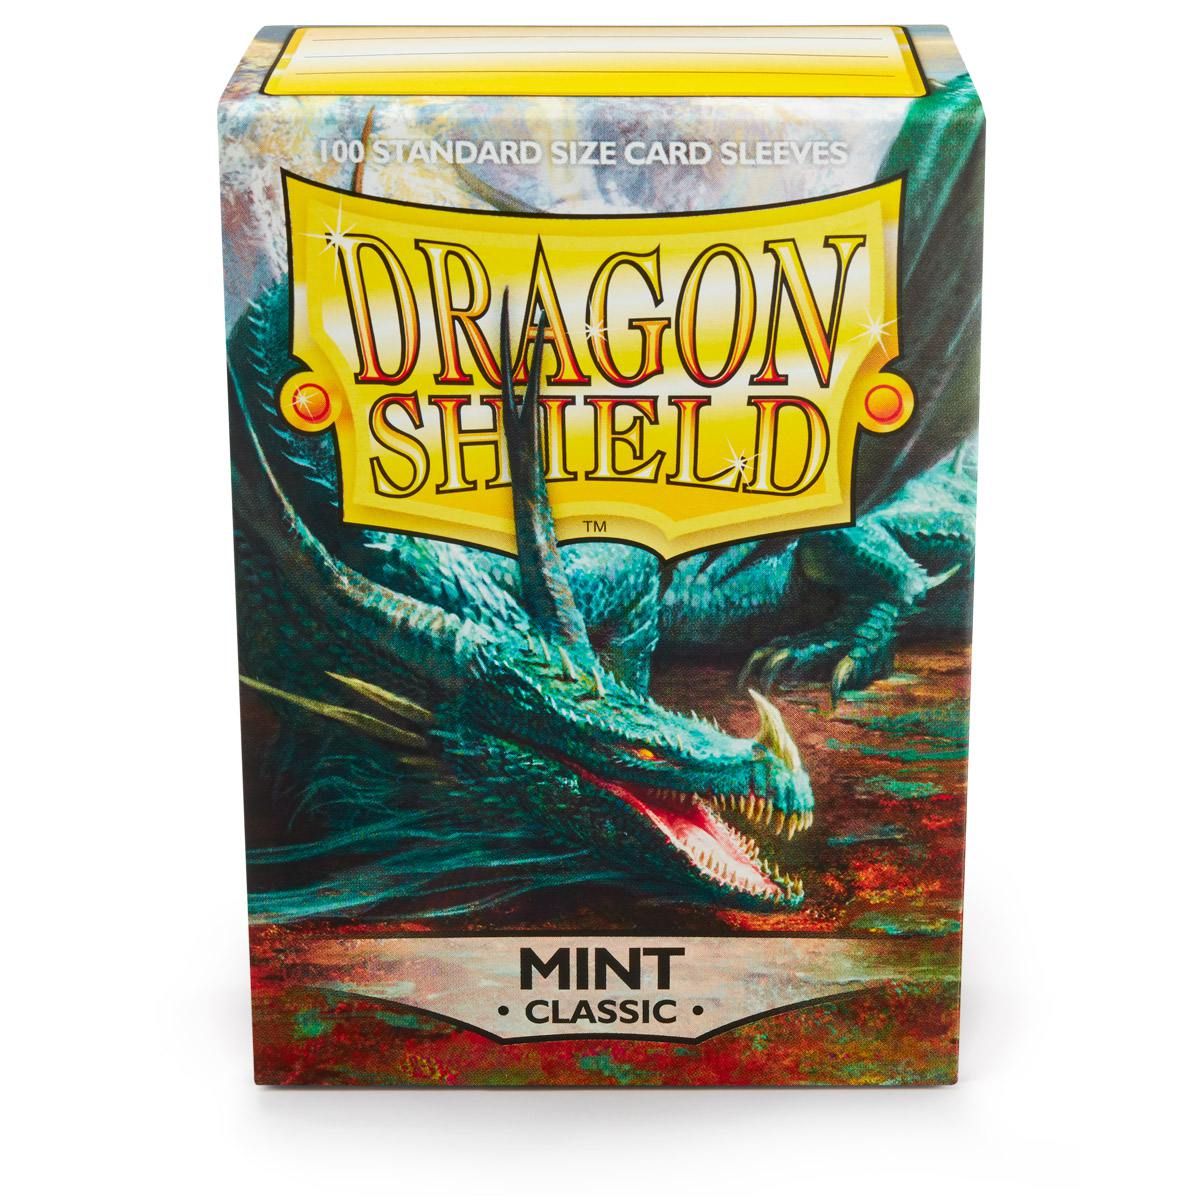 Dragon Shield: Standard 100ct Sleeves - Mint (Classic)